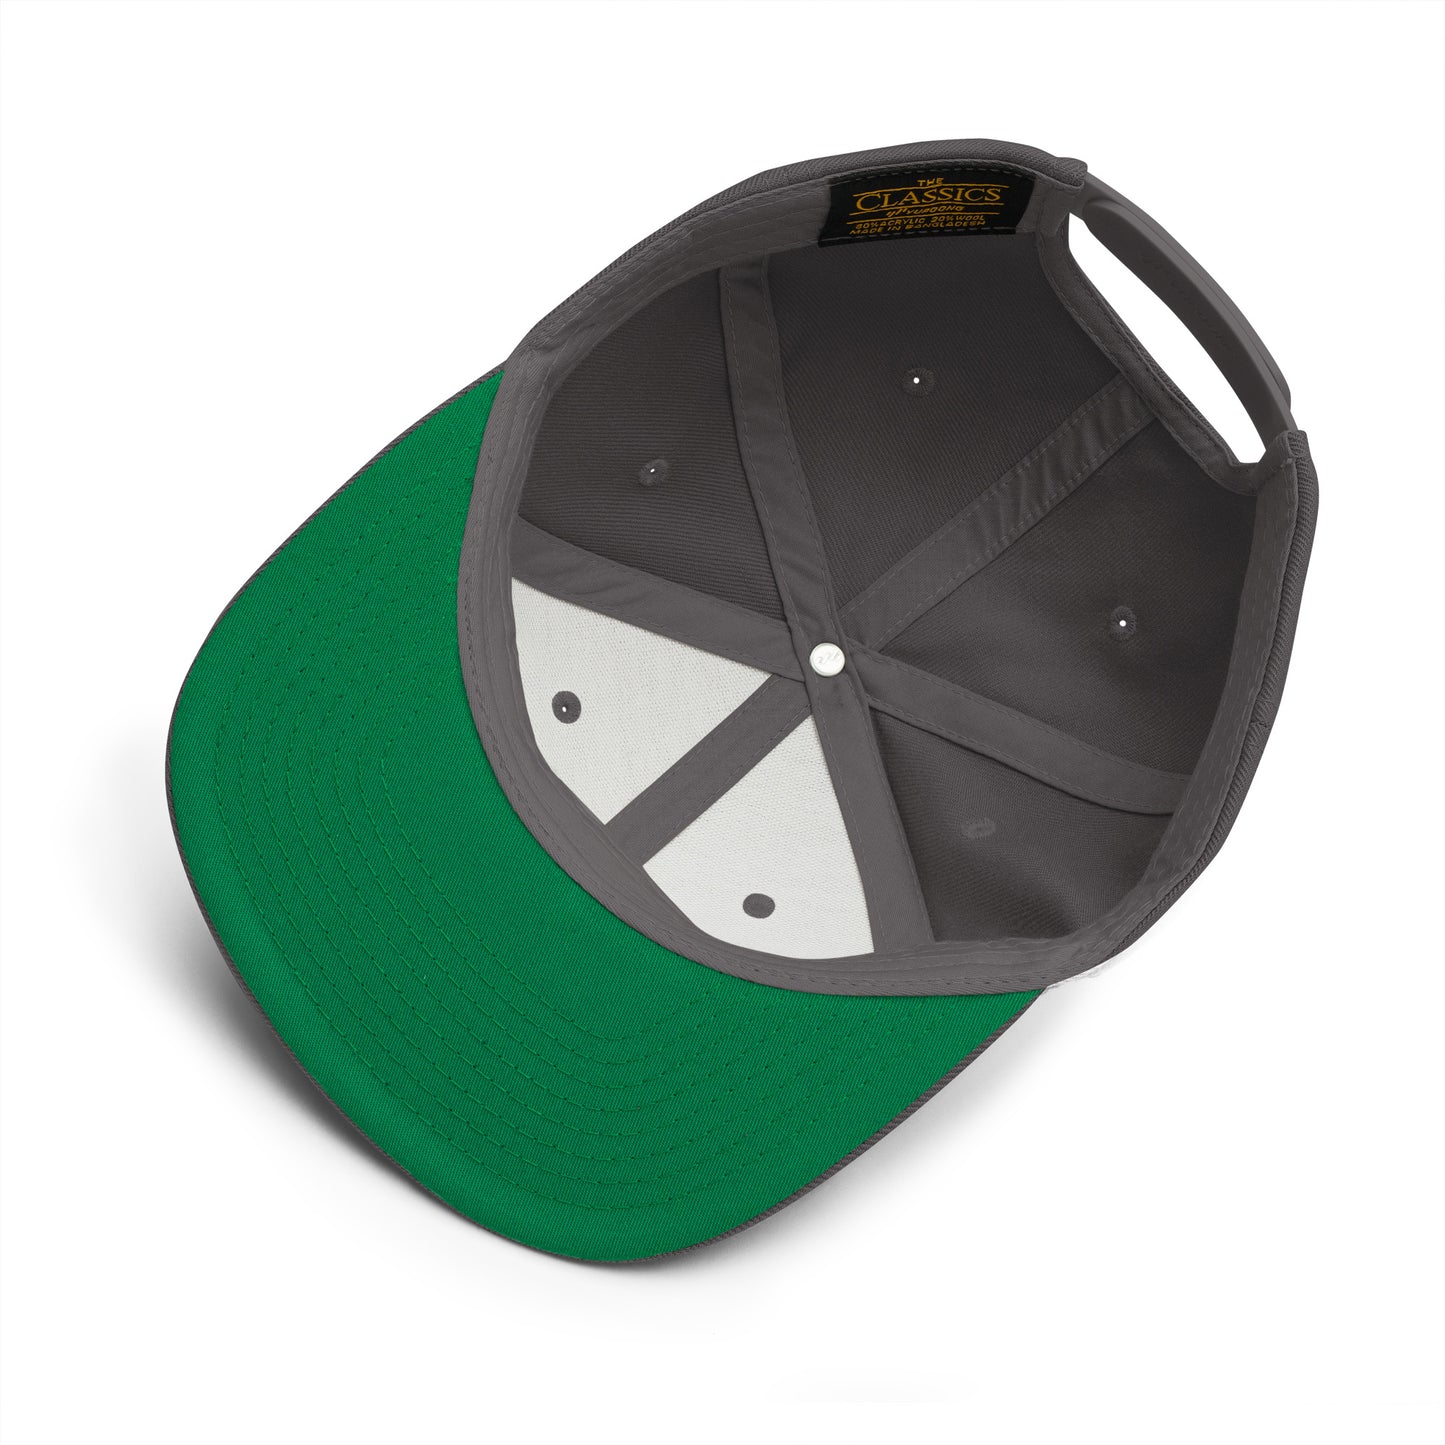 Comp Unisex GR Snapback Hat